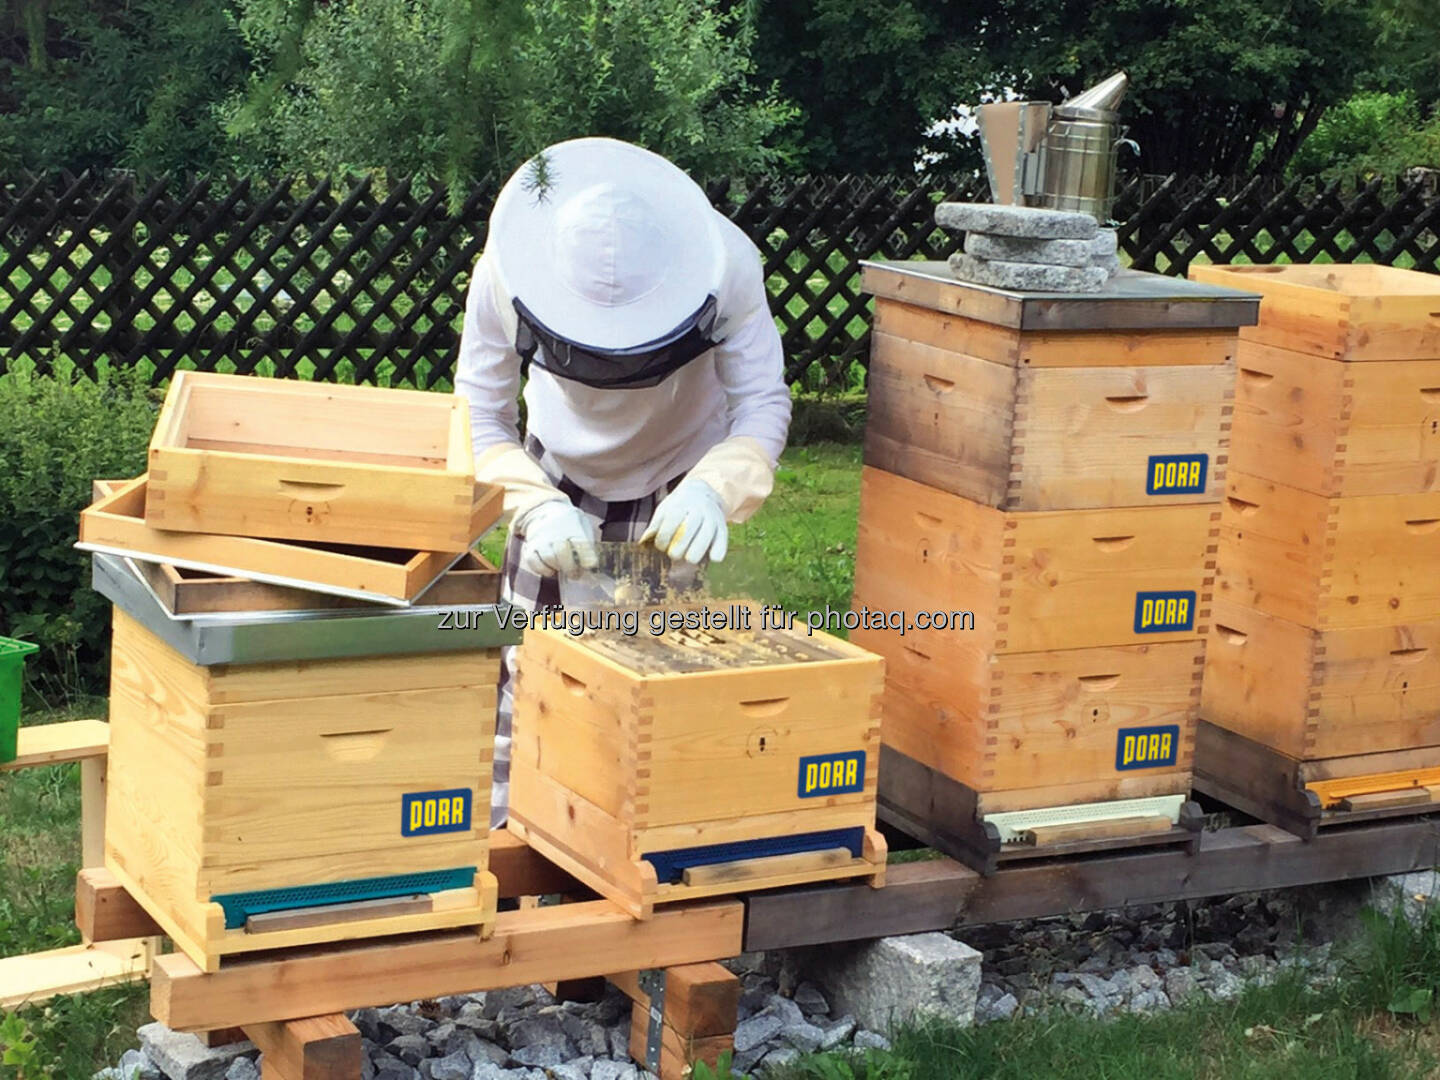 Porr mit Bienen-Initiative bee@PORR, Bild: Porr